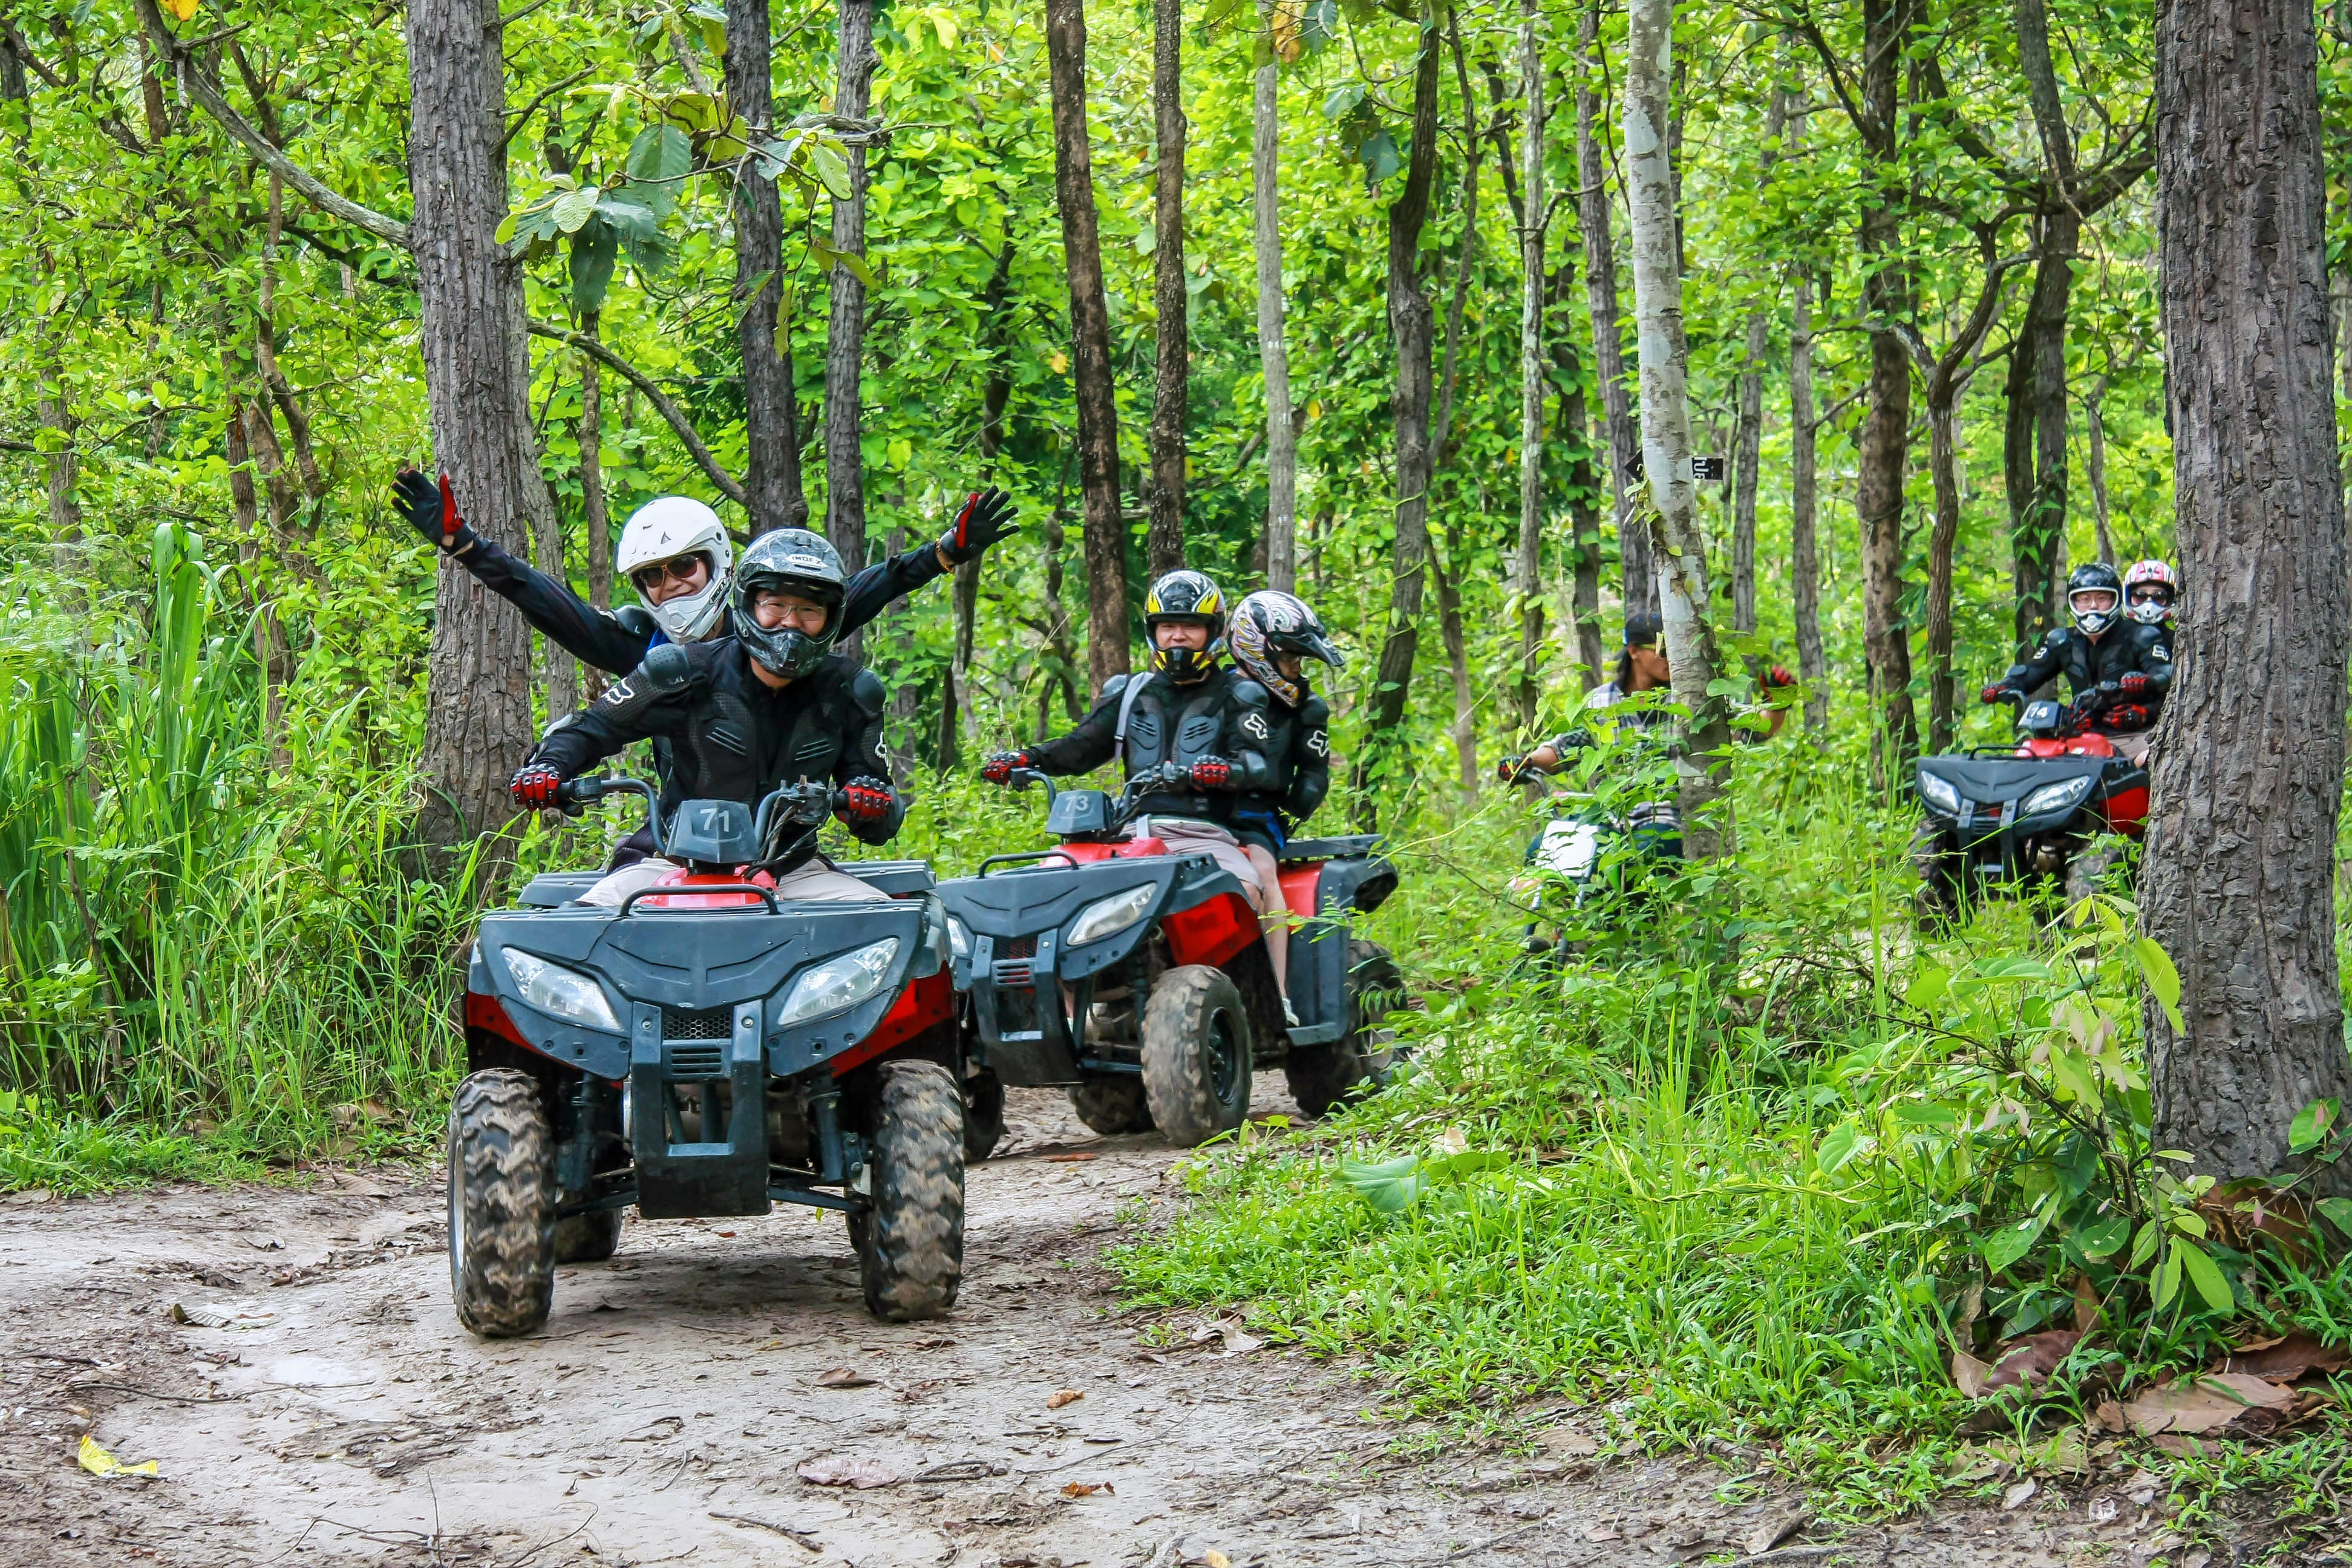 Discover Pattaya's rural secret spots on an epic ATV tour